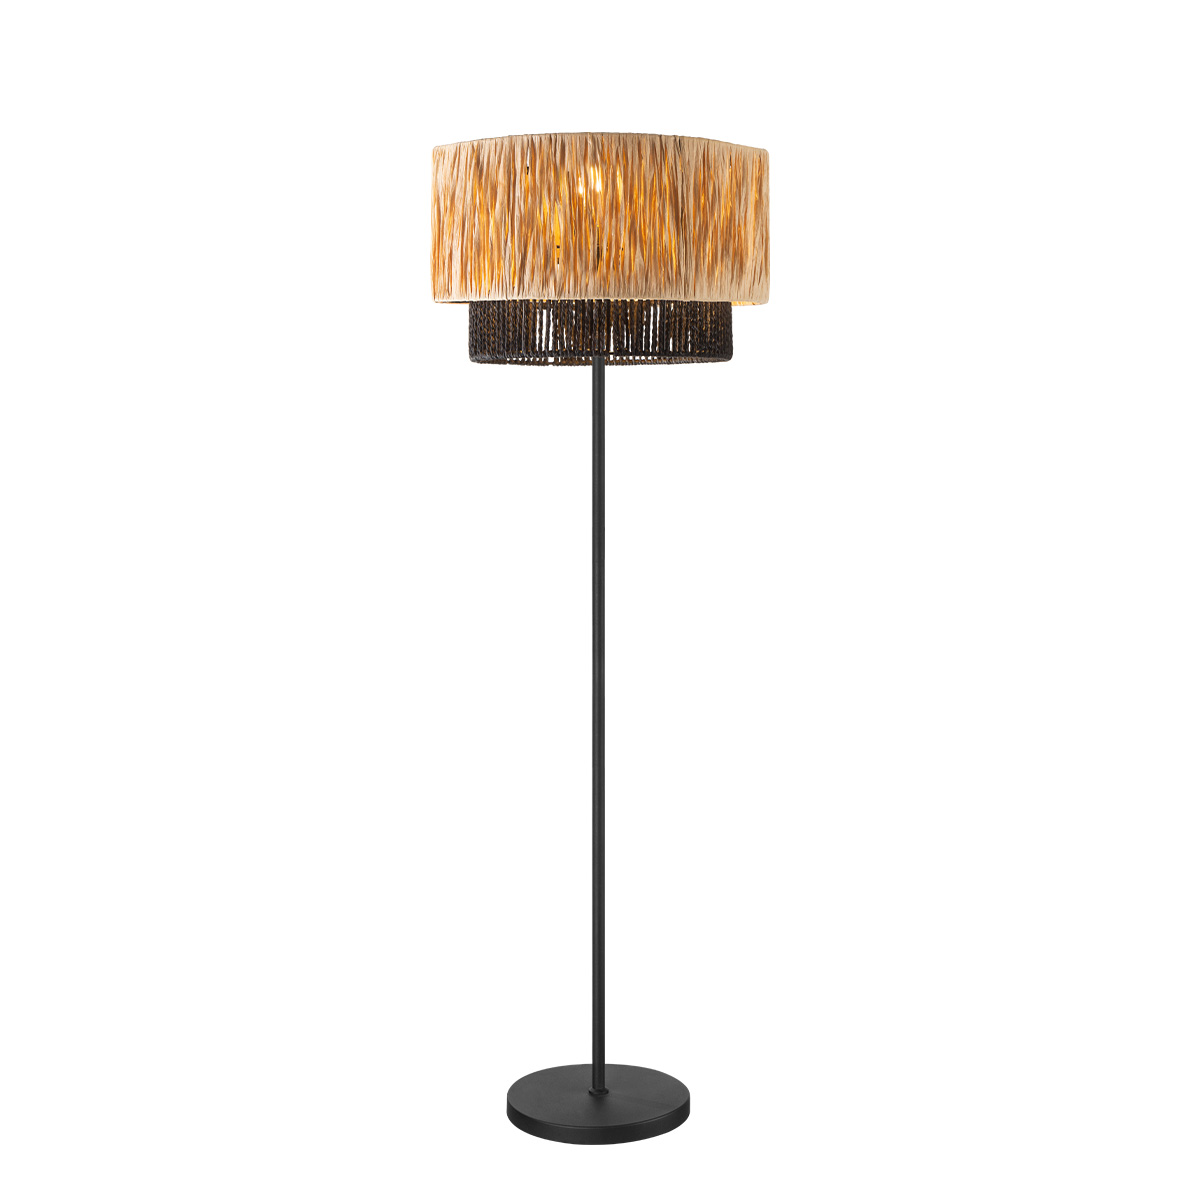 Tangla lighting - TLF7439-01NB - LED Floor lamp 1 Light - sea grass + paper rope - sand black + natural - medium - E27